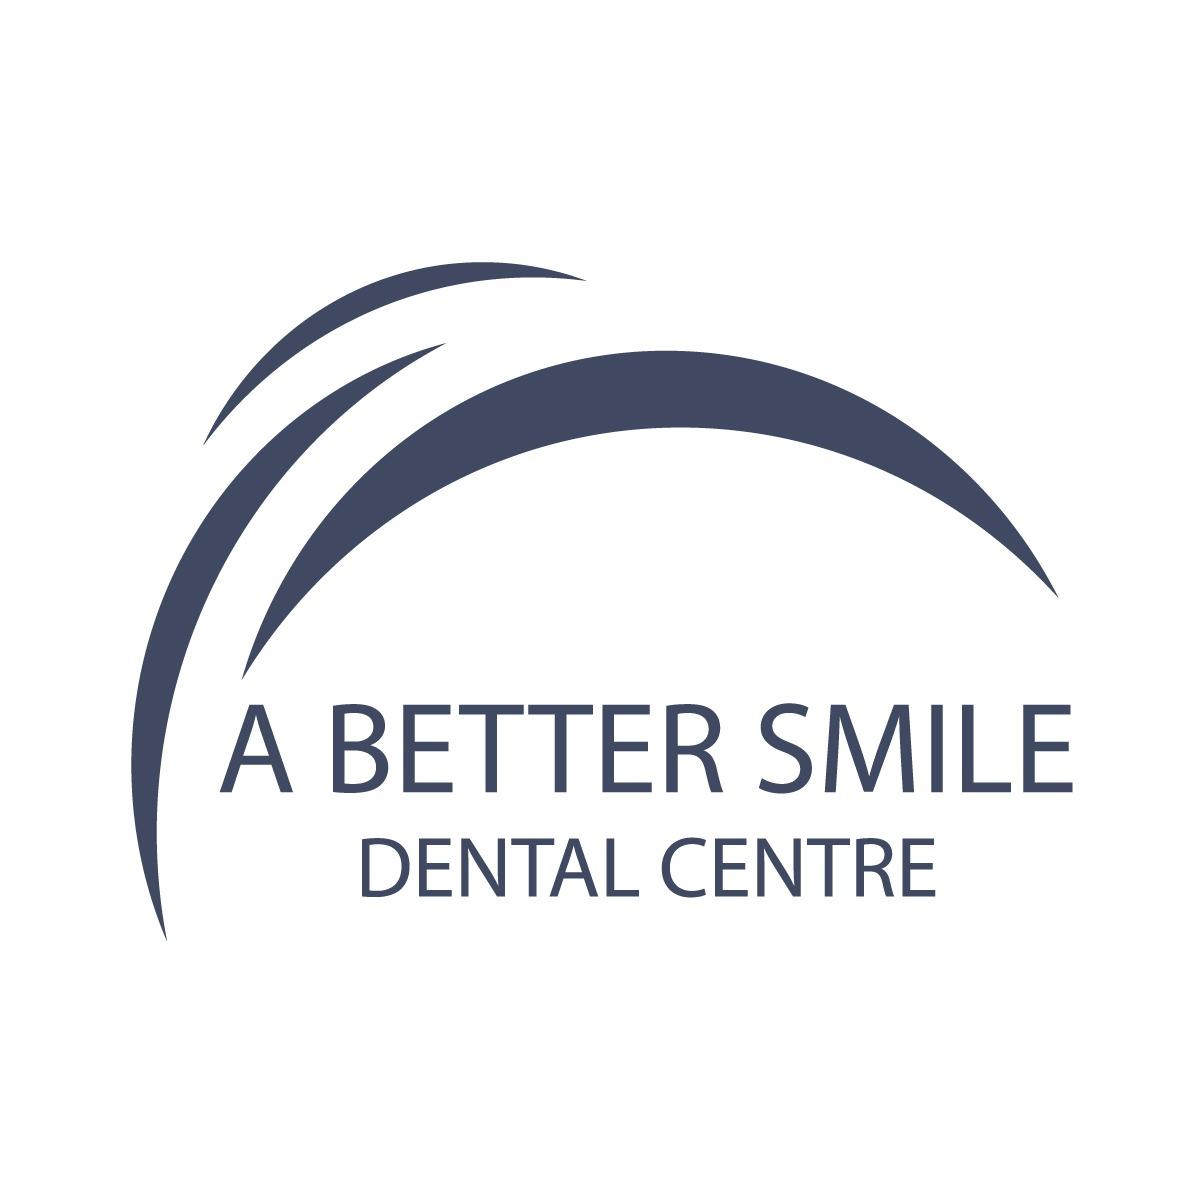 A Better Smile Dental Centre - Sydney, NSW 2000 - (02) 9427 3366 | ShowMeLocal.com